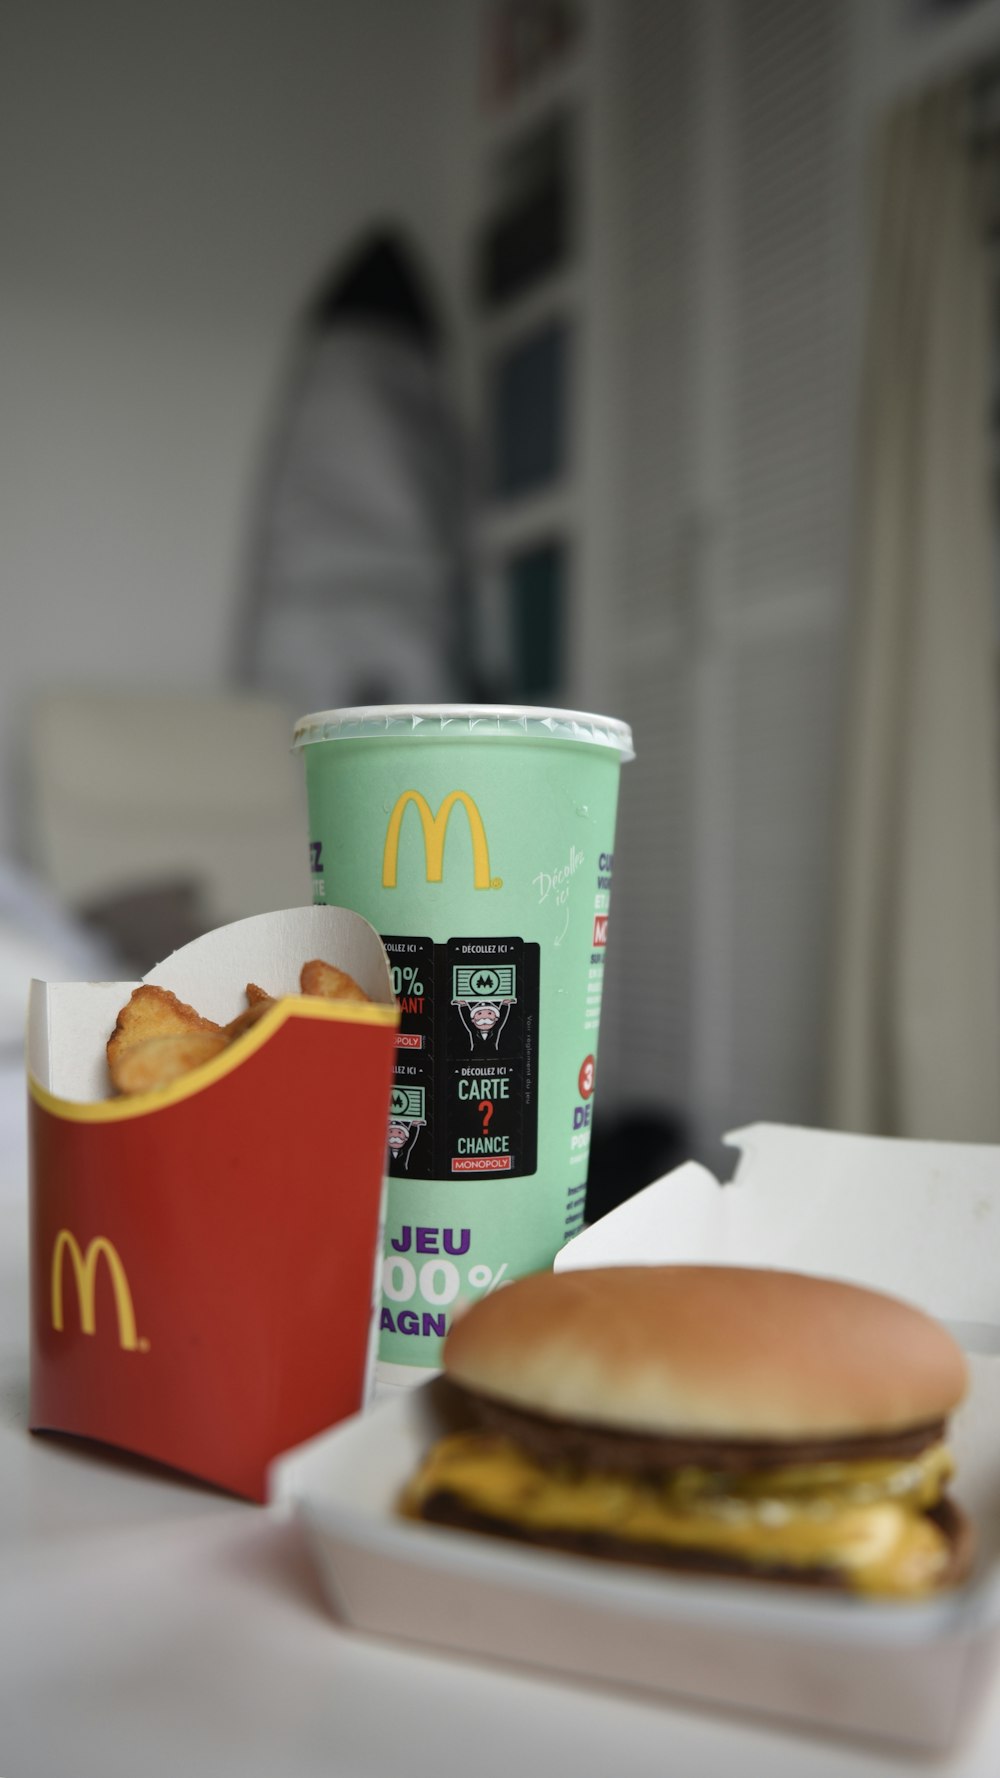 McDonald burger, fries, and soda on desk